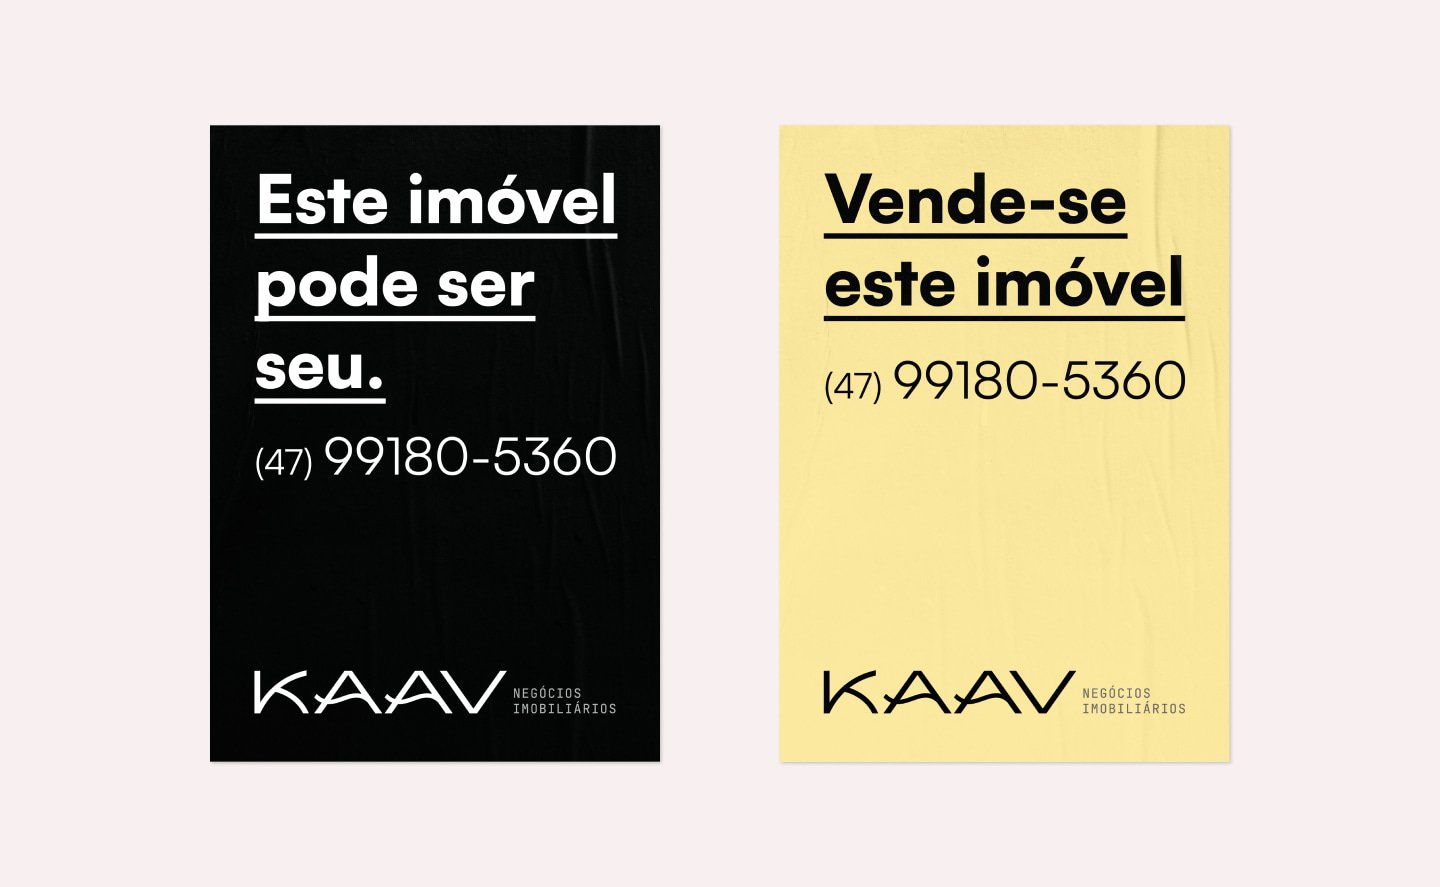 KAAV Imóveis logotype ad